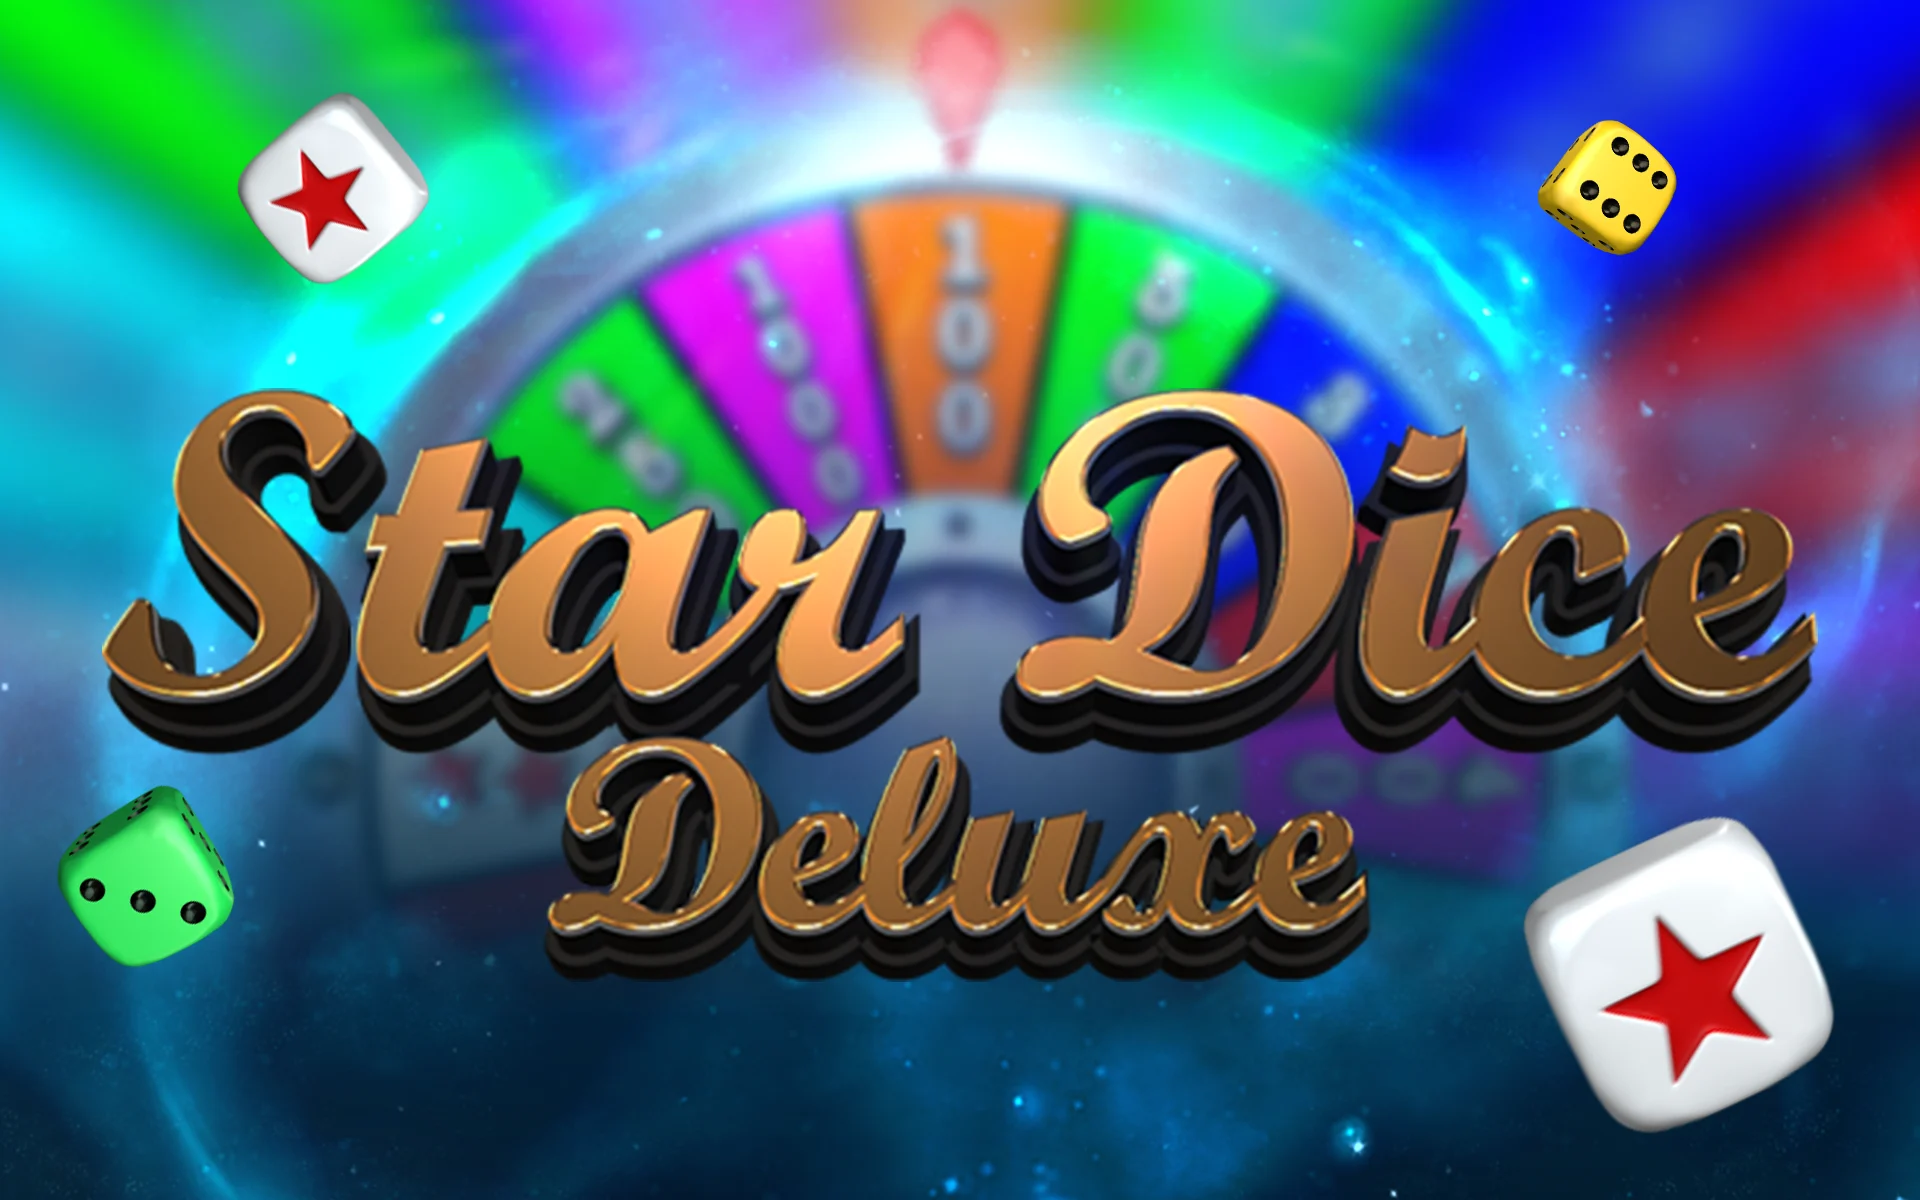 Play Star Dice Deluxe on Starcasinodice.be online casino